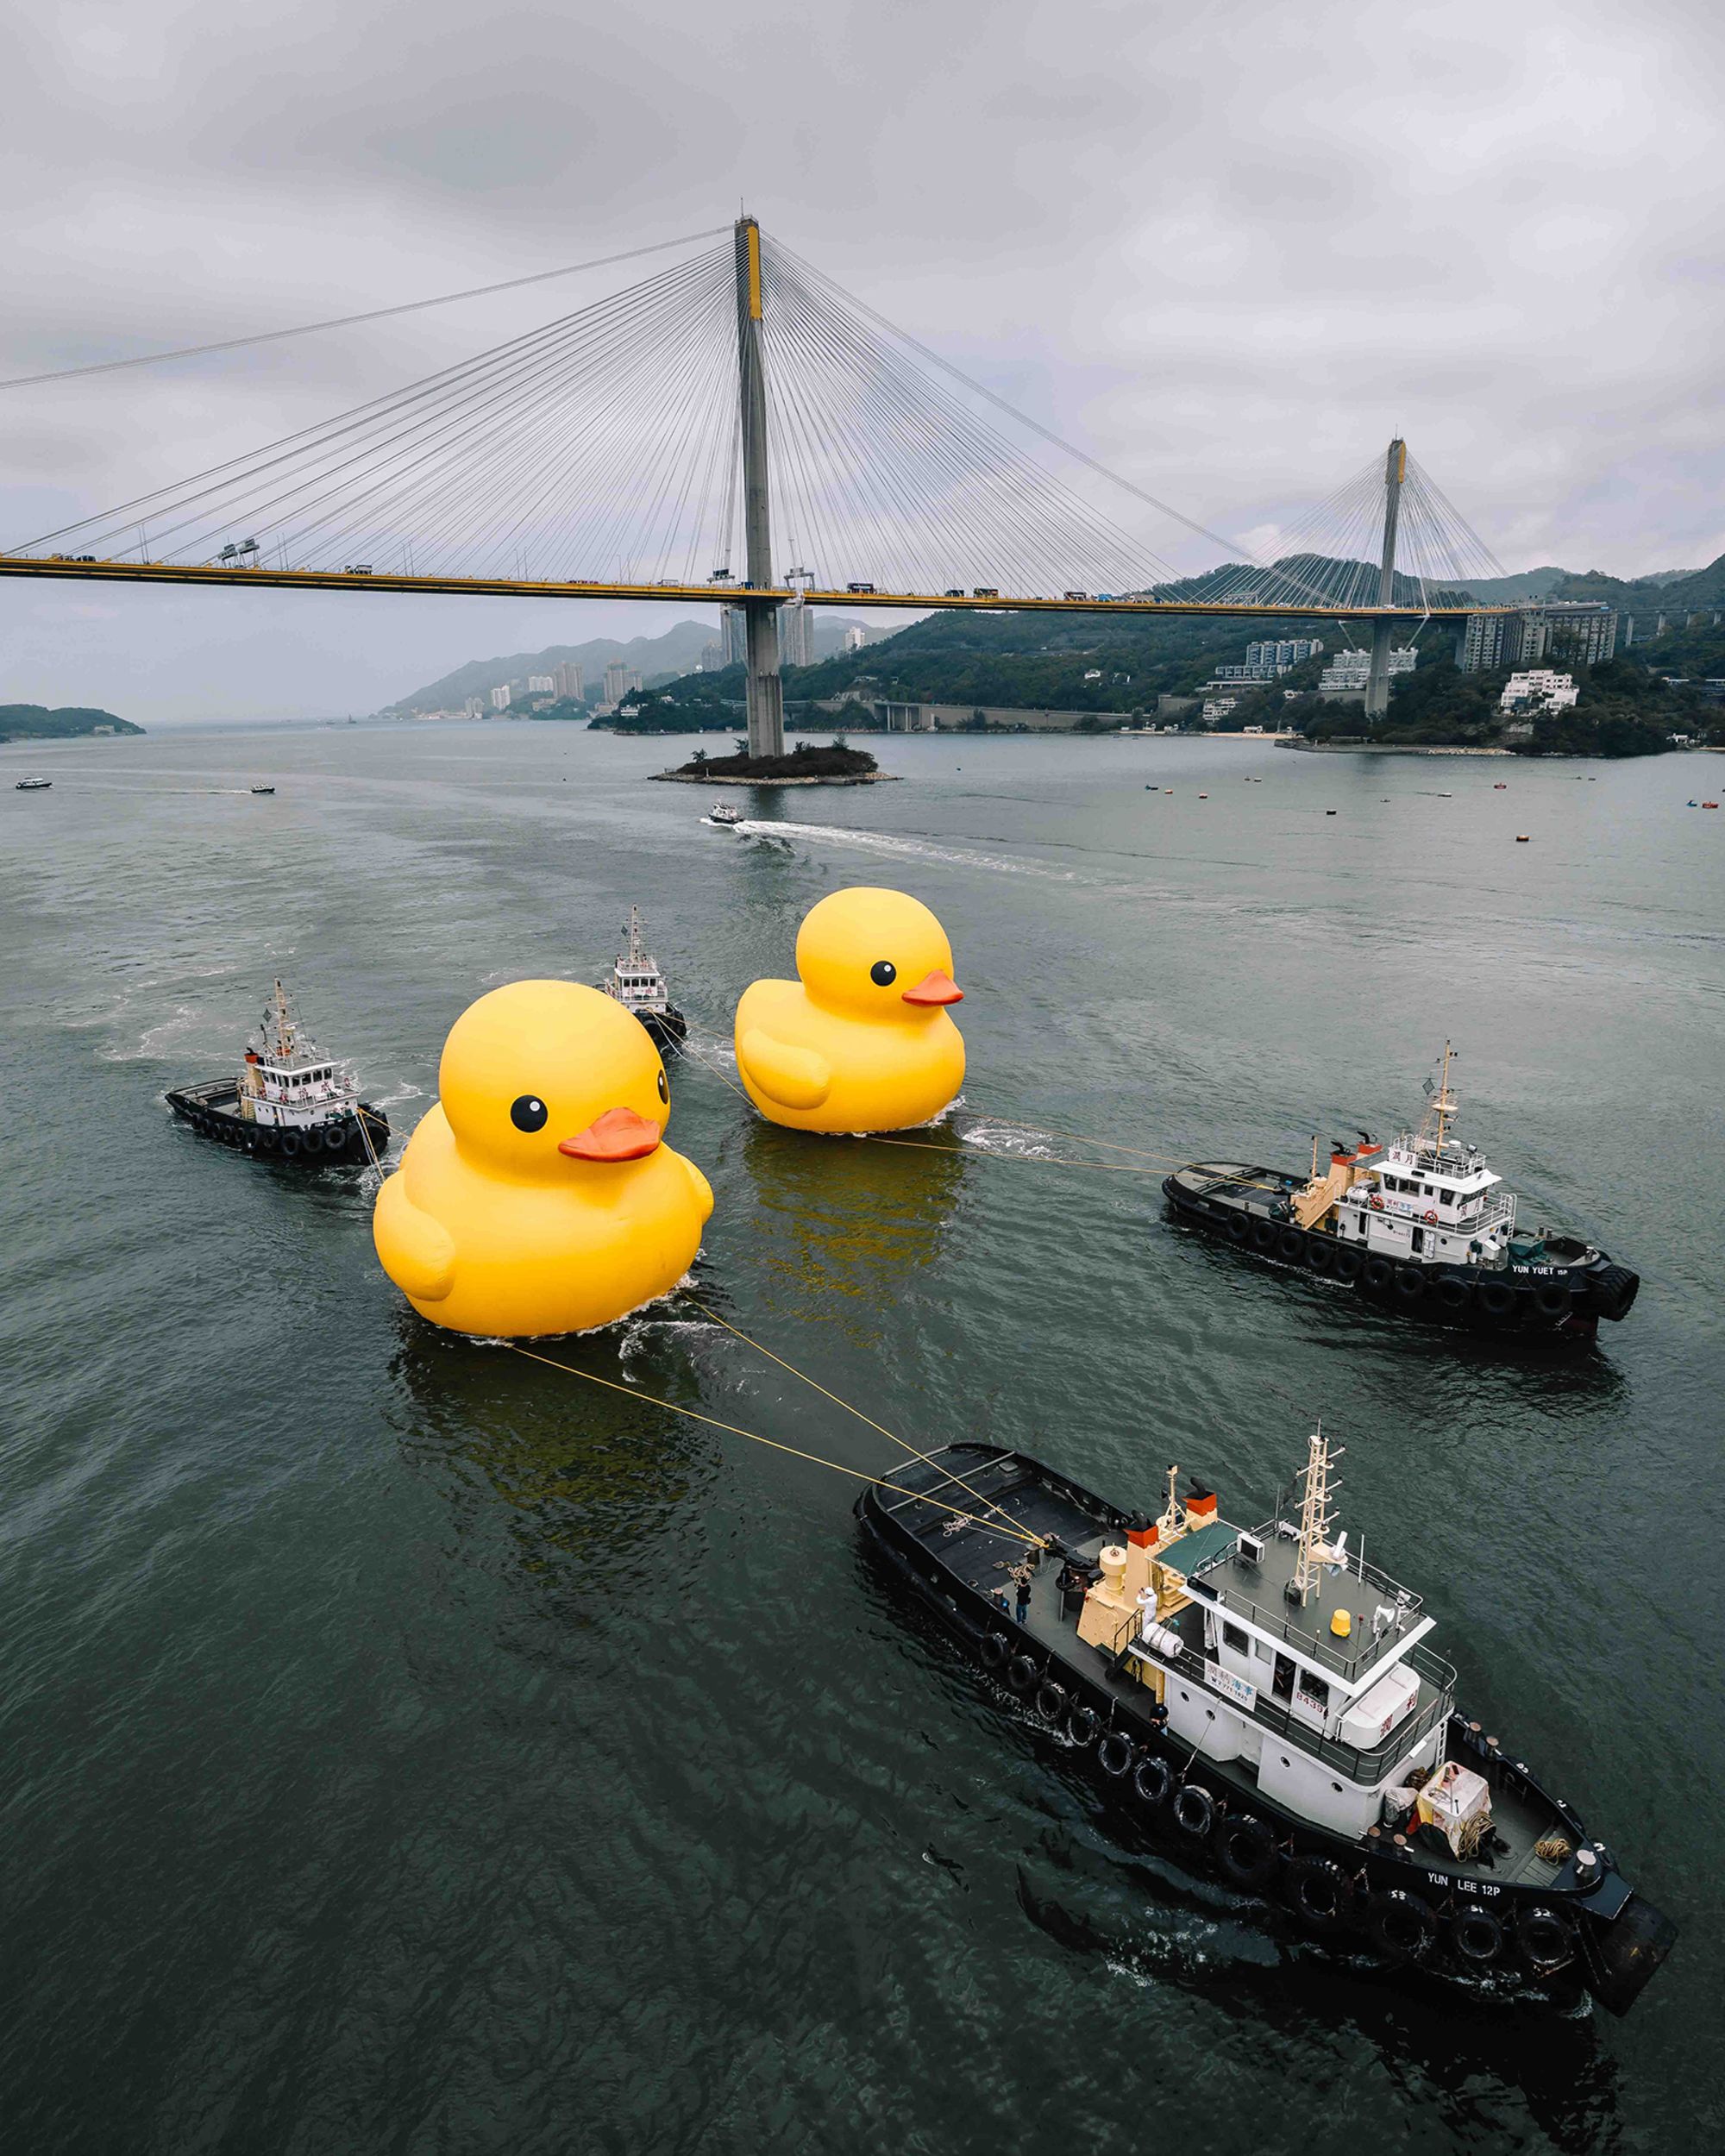 Florentijn Hofman's 'Rubber Duck' returns to Hong Kong — and now